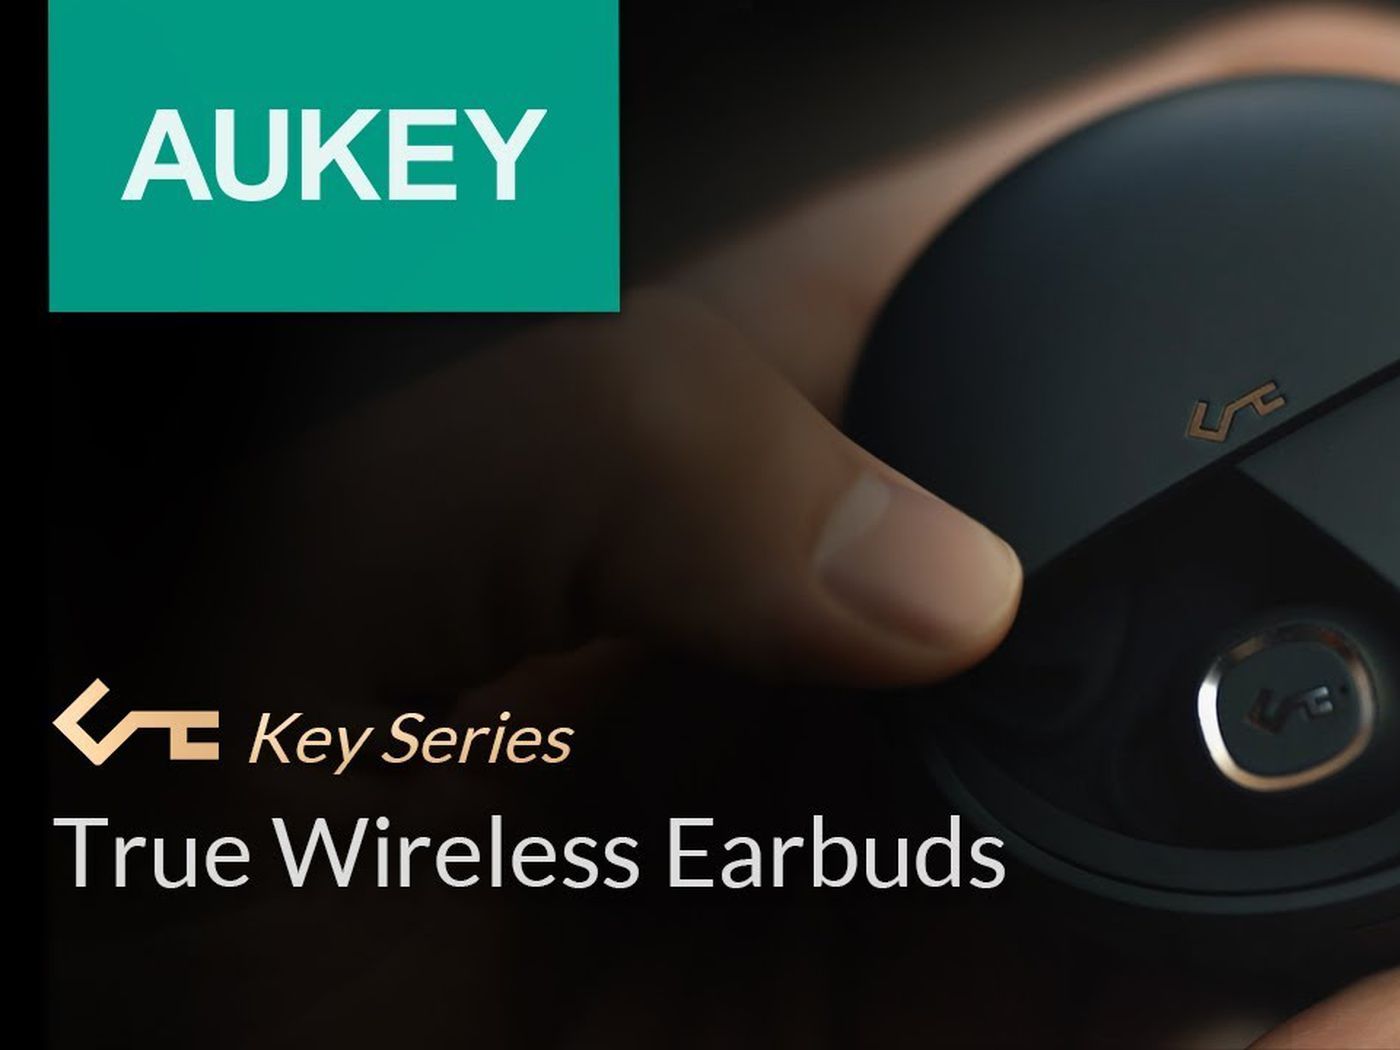 Are Aukey true wireless earbuds good?